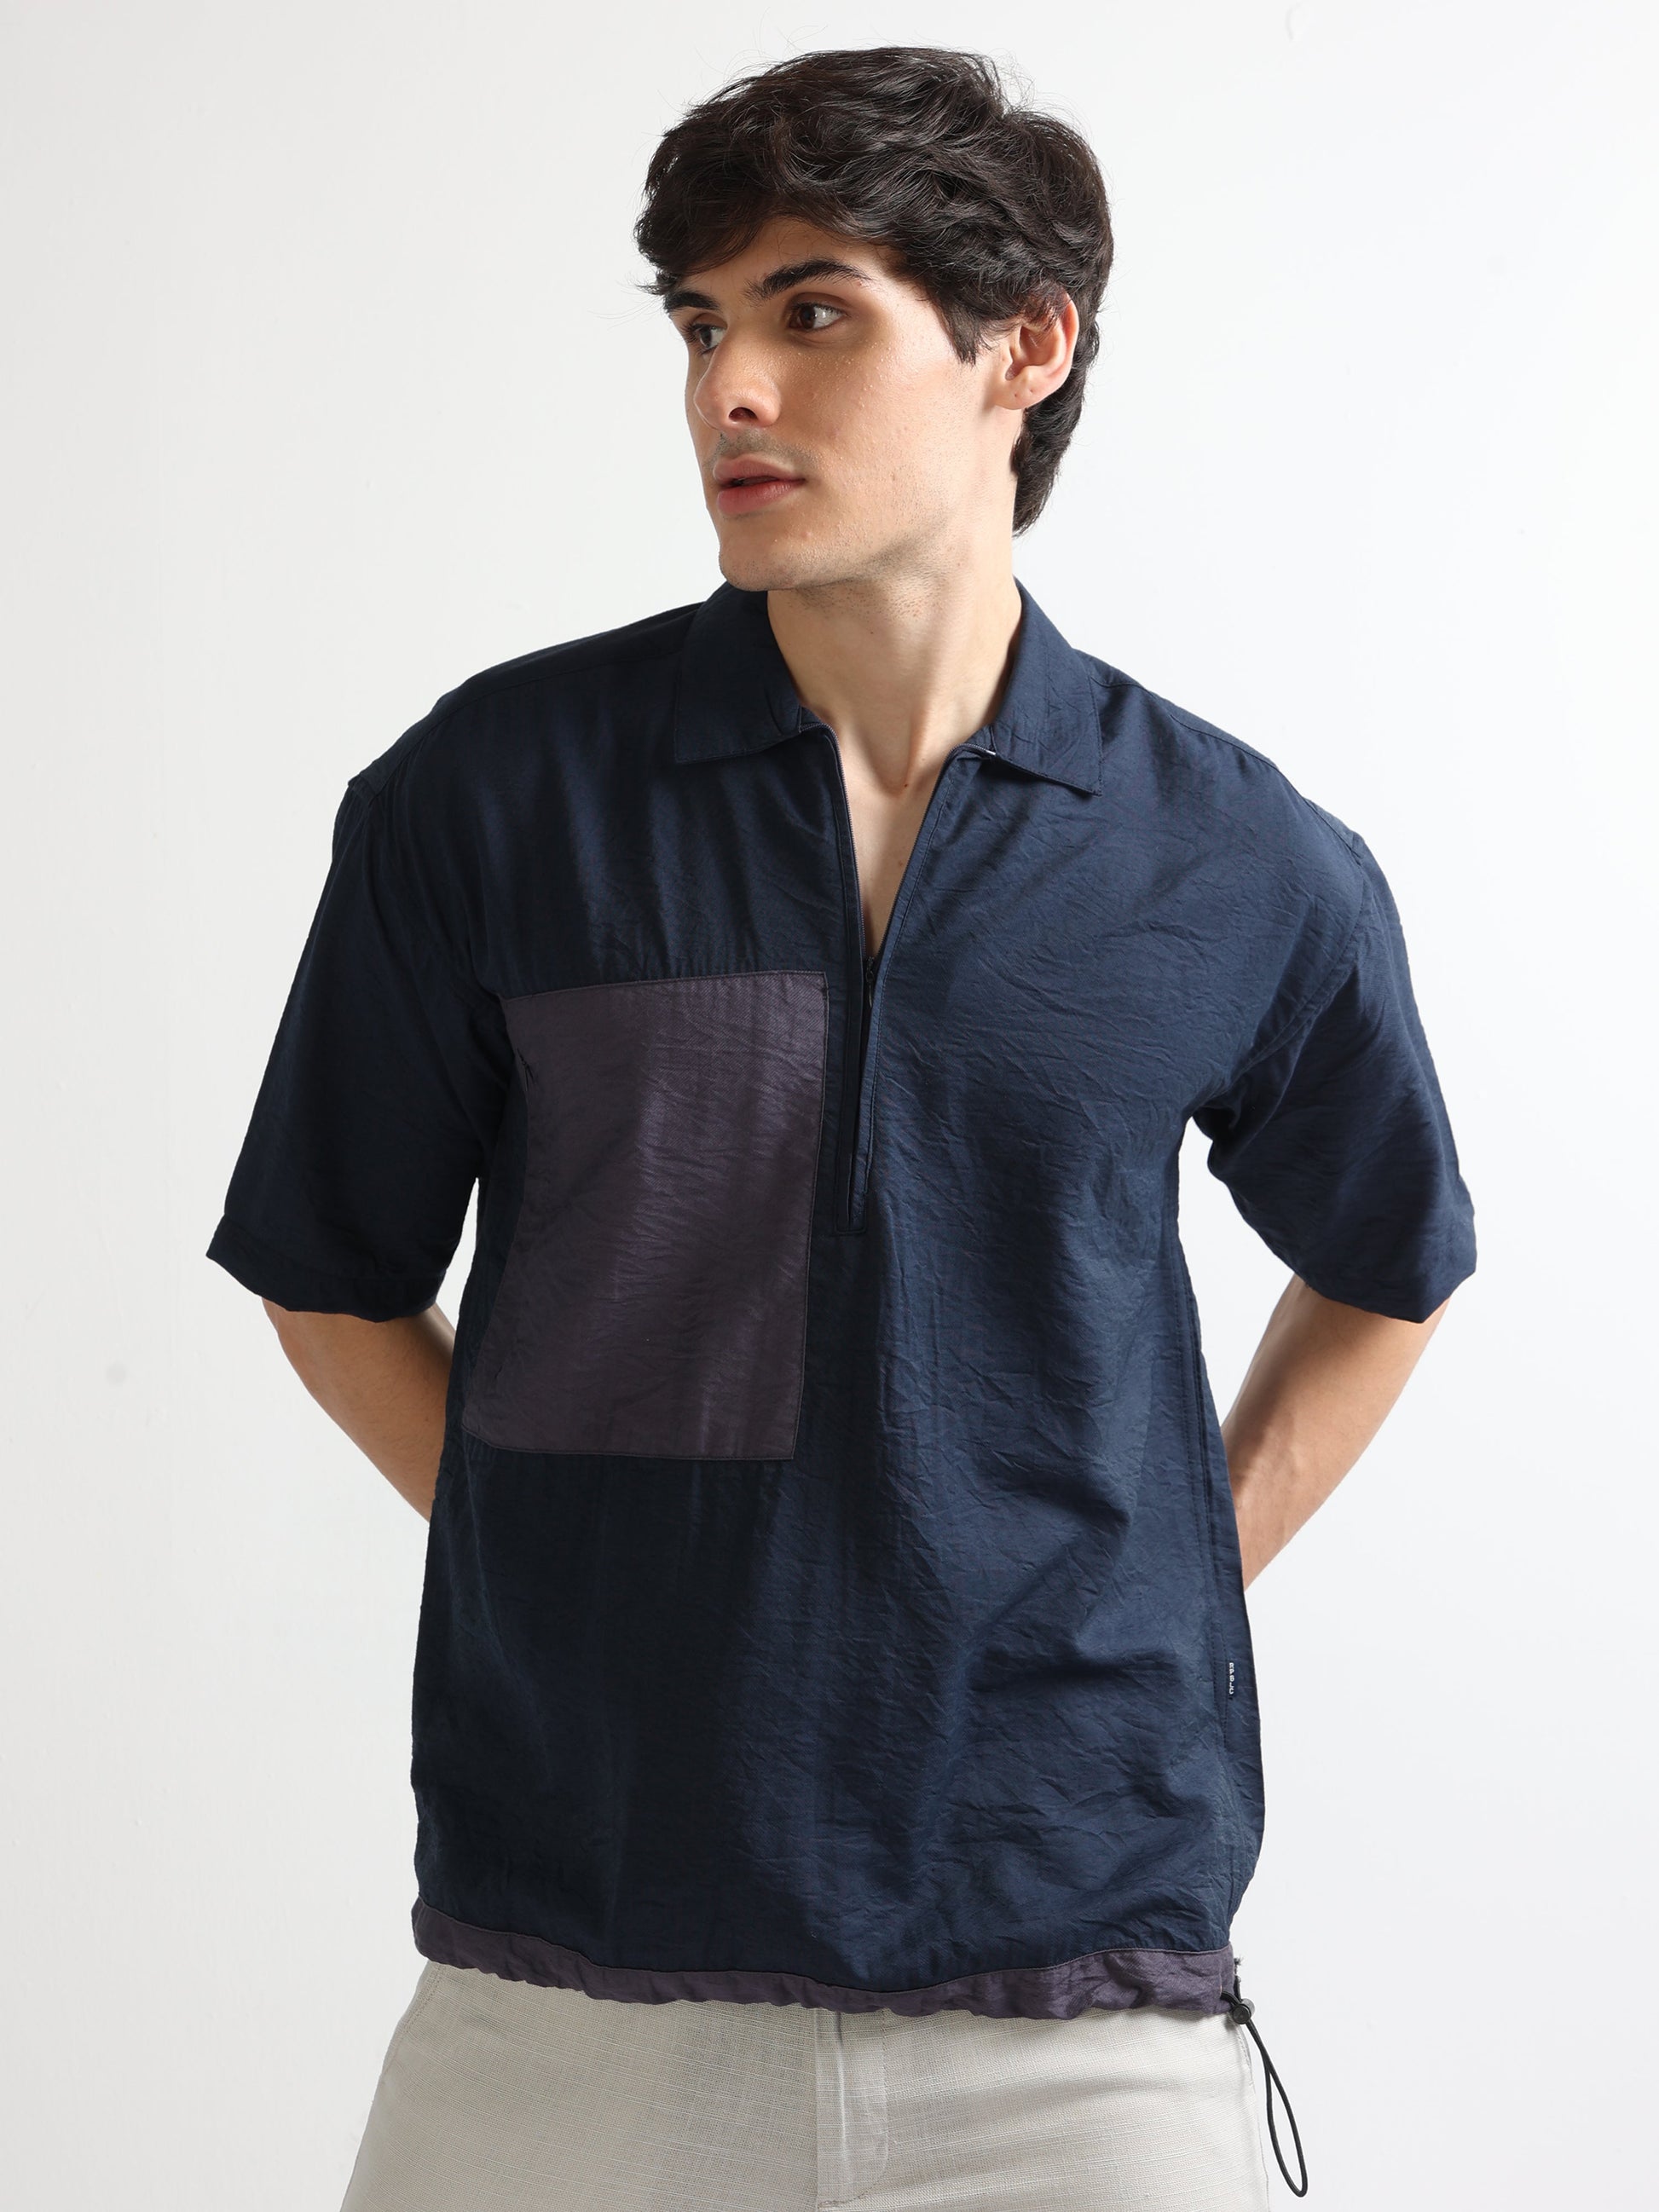 Buy Imported Fabric Stylish Drawcod Shirt Online.